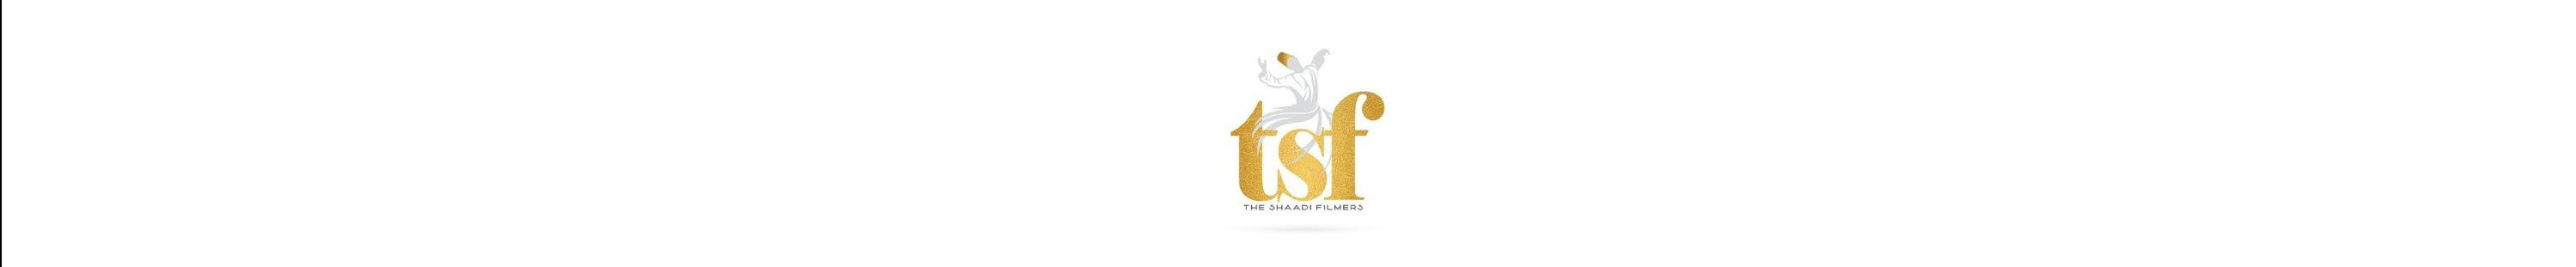 the shaadi filmerss profilbanner